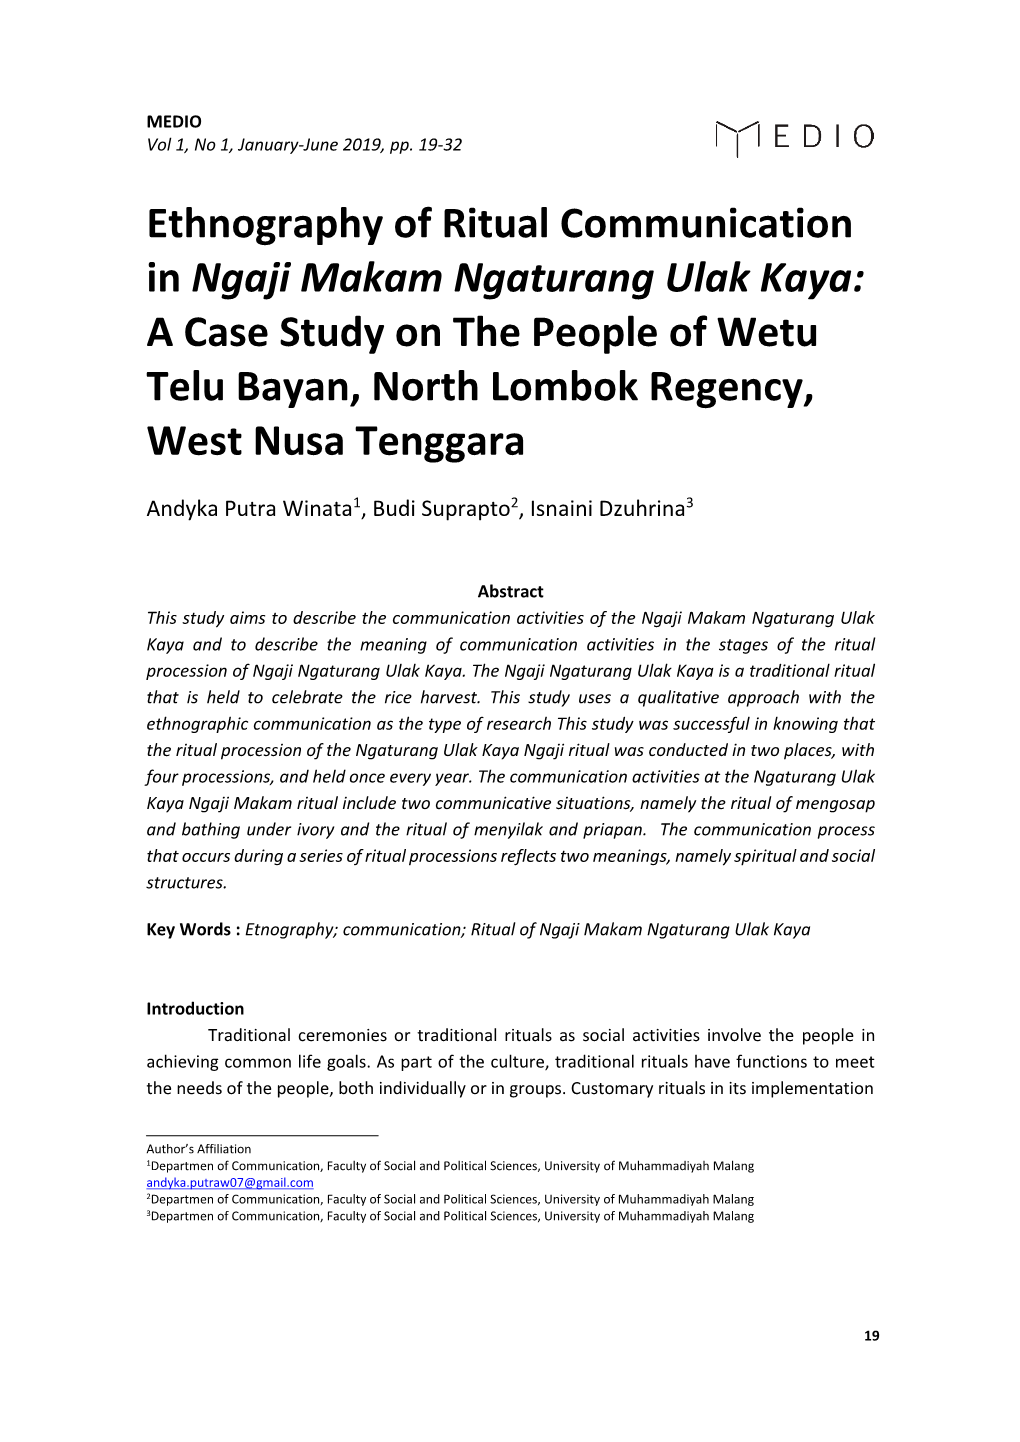 Ethnography of Ritual Communication in Ngaji Makam Ngaturang Ulak Kaya: a Case Study on the People of Wetu Telu Bayan, North Lombok Regency, West Nusa Tenggara